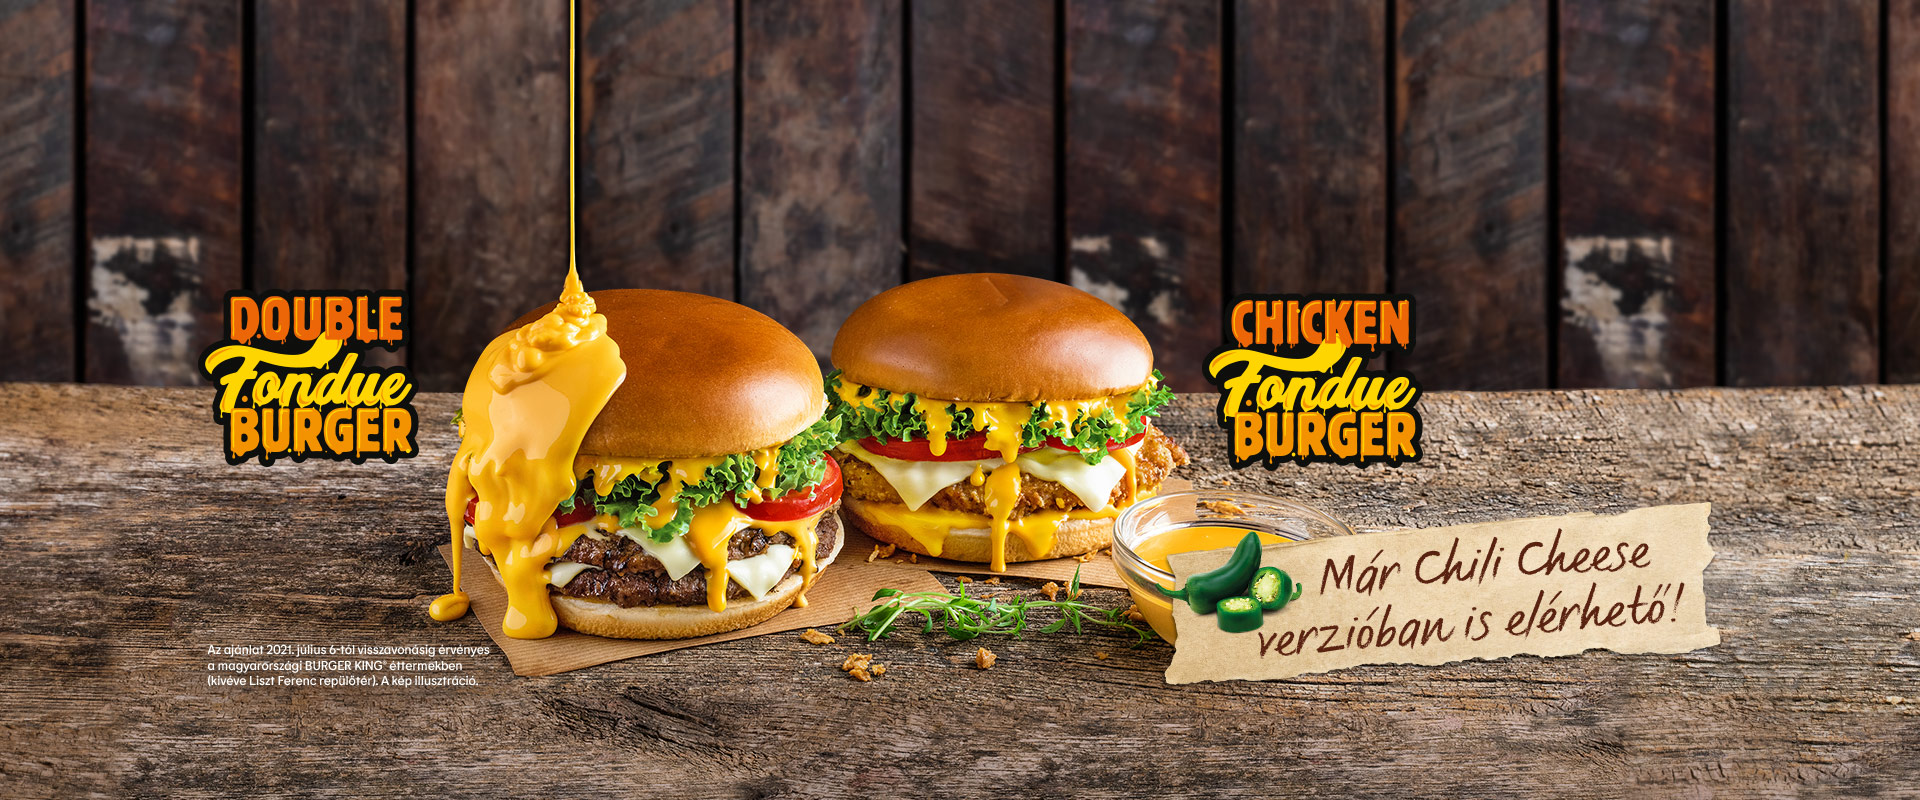 Chili Chicken Fondue Burger